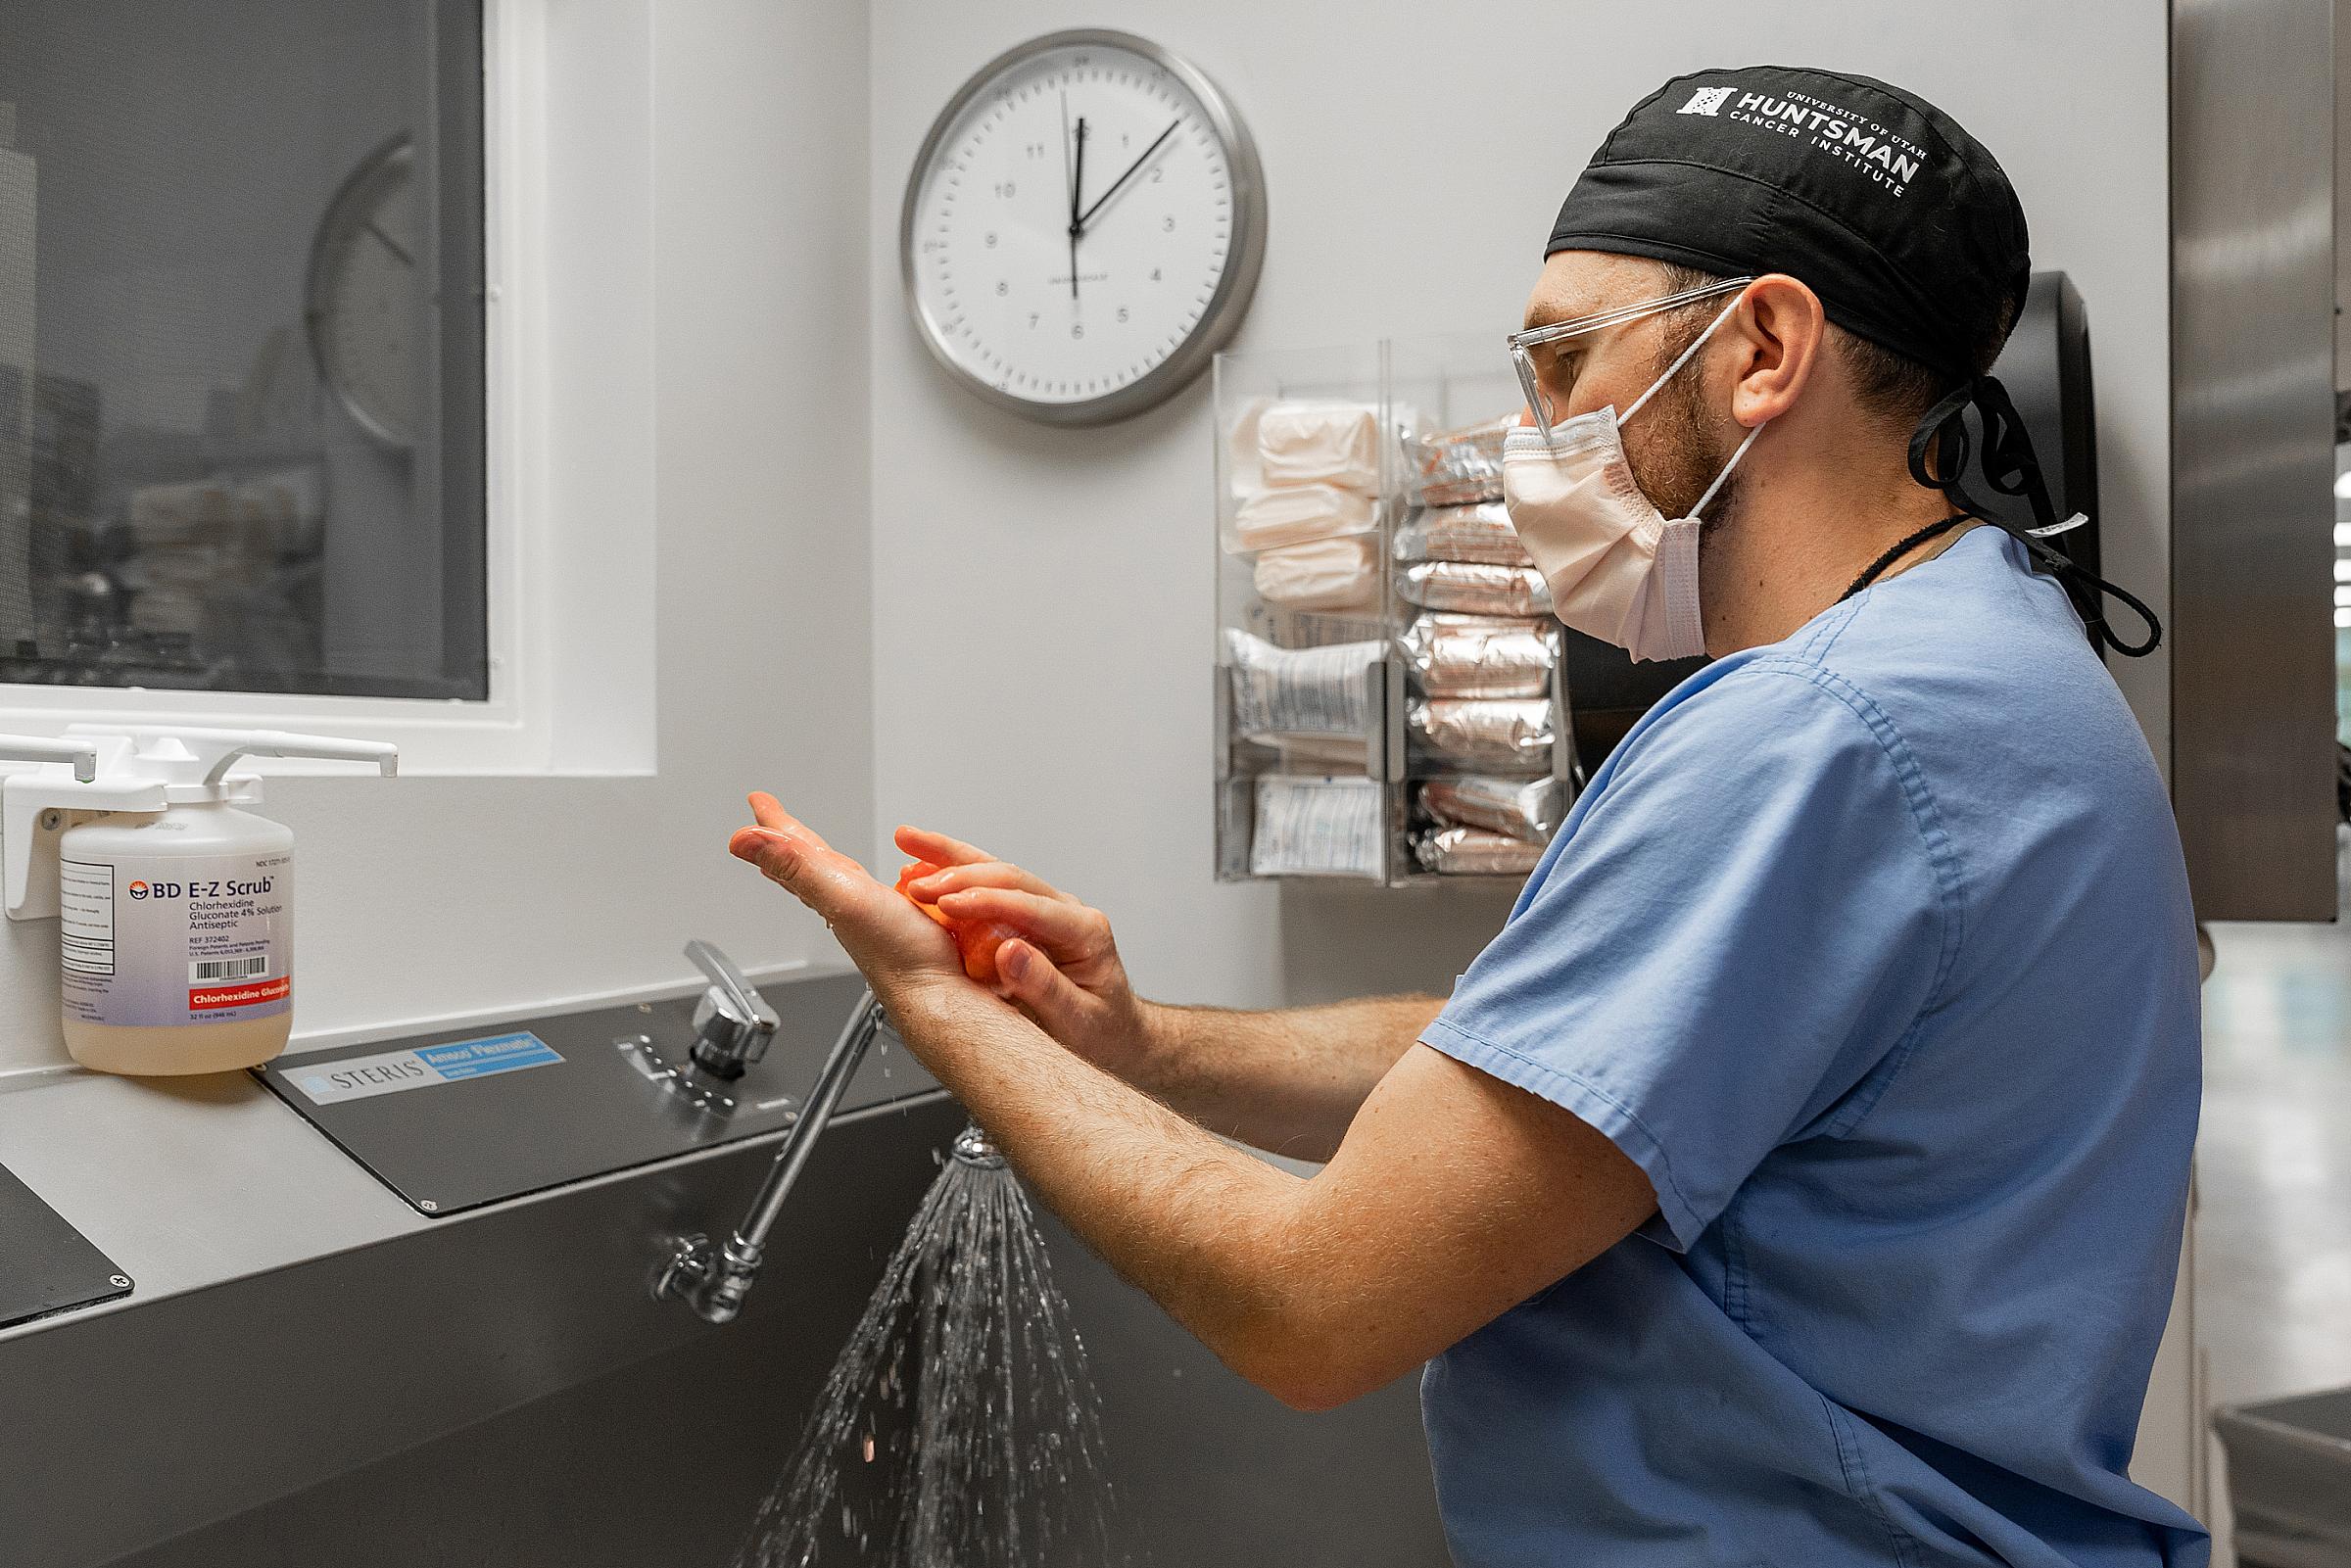 Brian Mitzman, MD scrubbing his hands prior to surgery